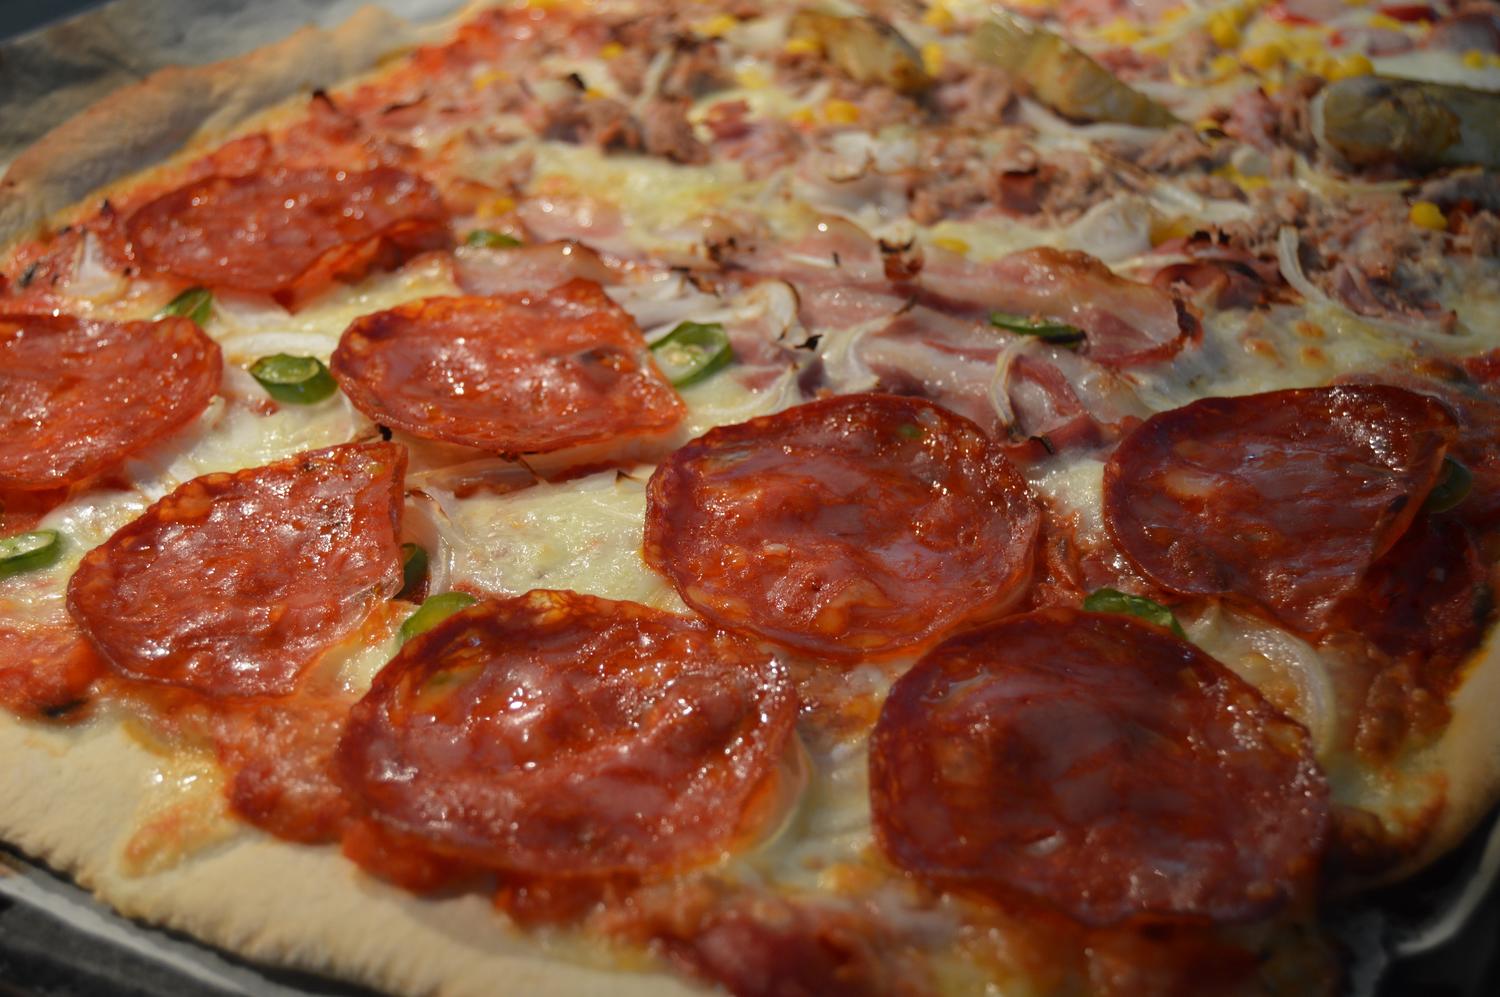 Pizza Teig Doppelte Menge Geht Auch — Rezepte Suchen